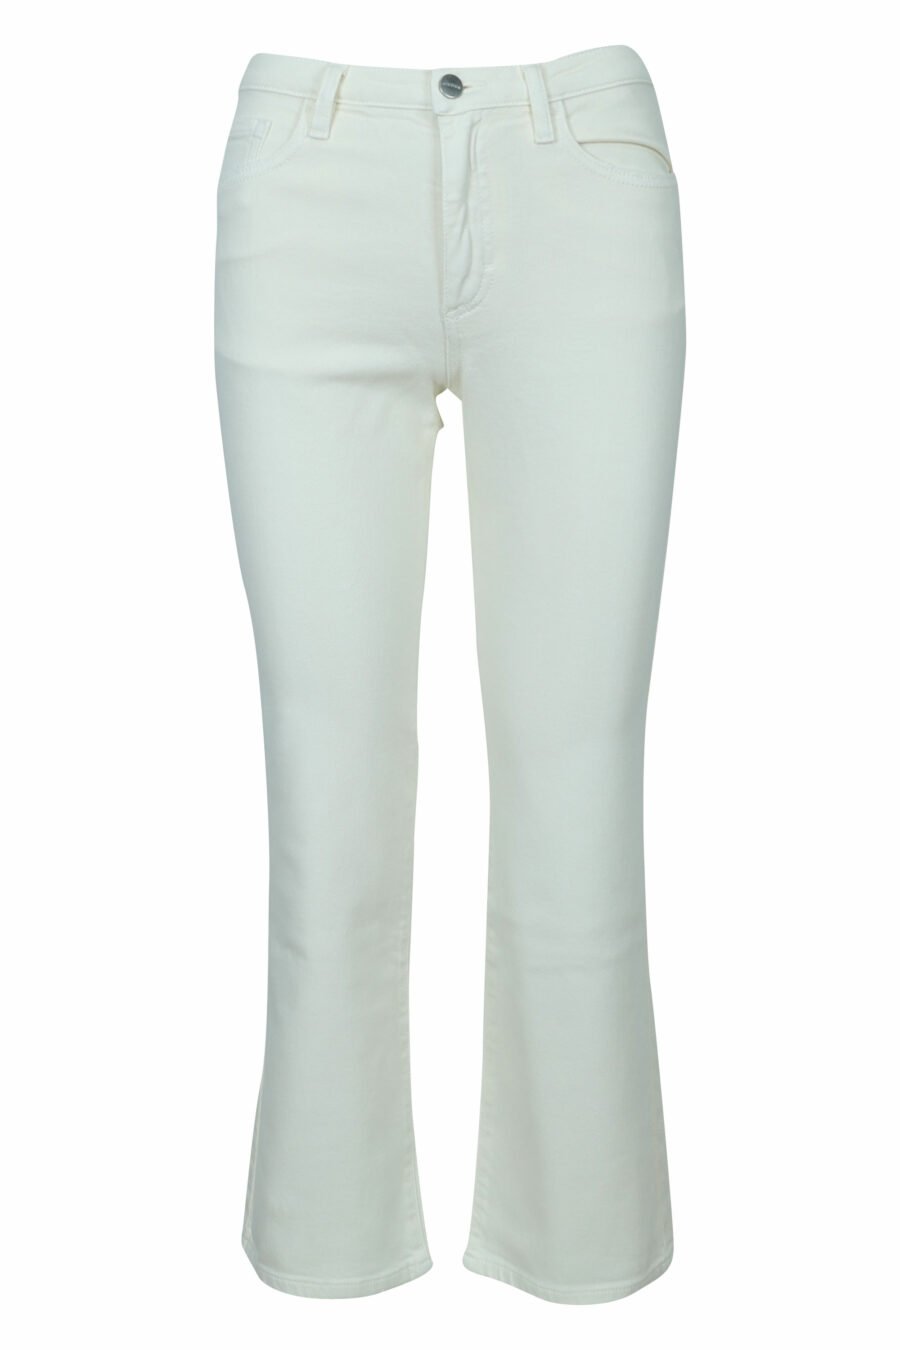 Pantalon "Pam" blanc crème avec botte large - 8059772787895